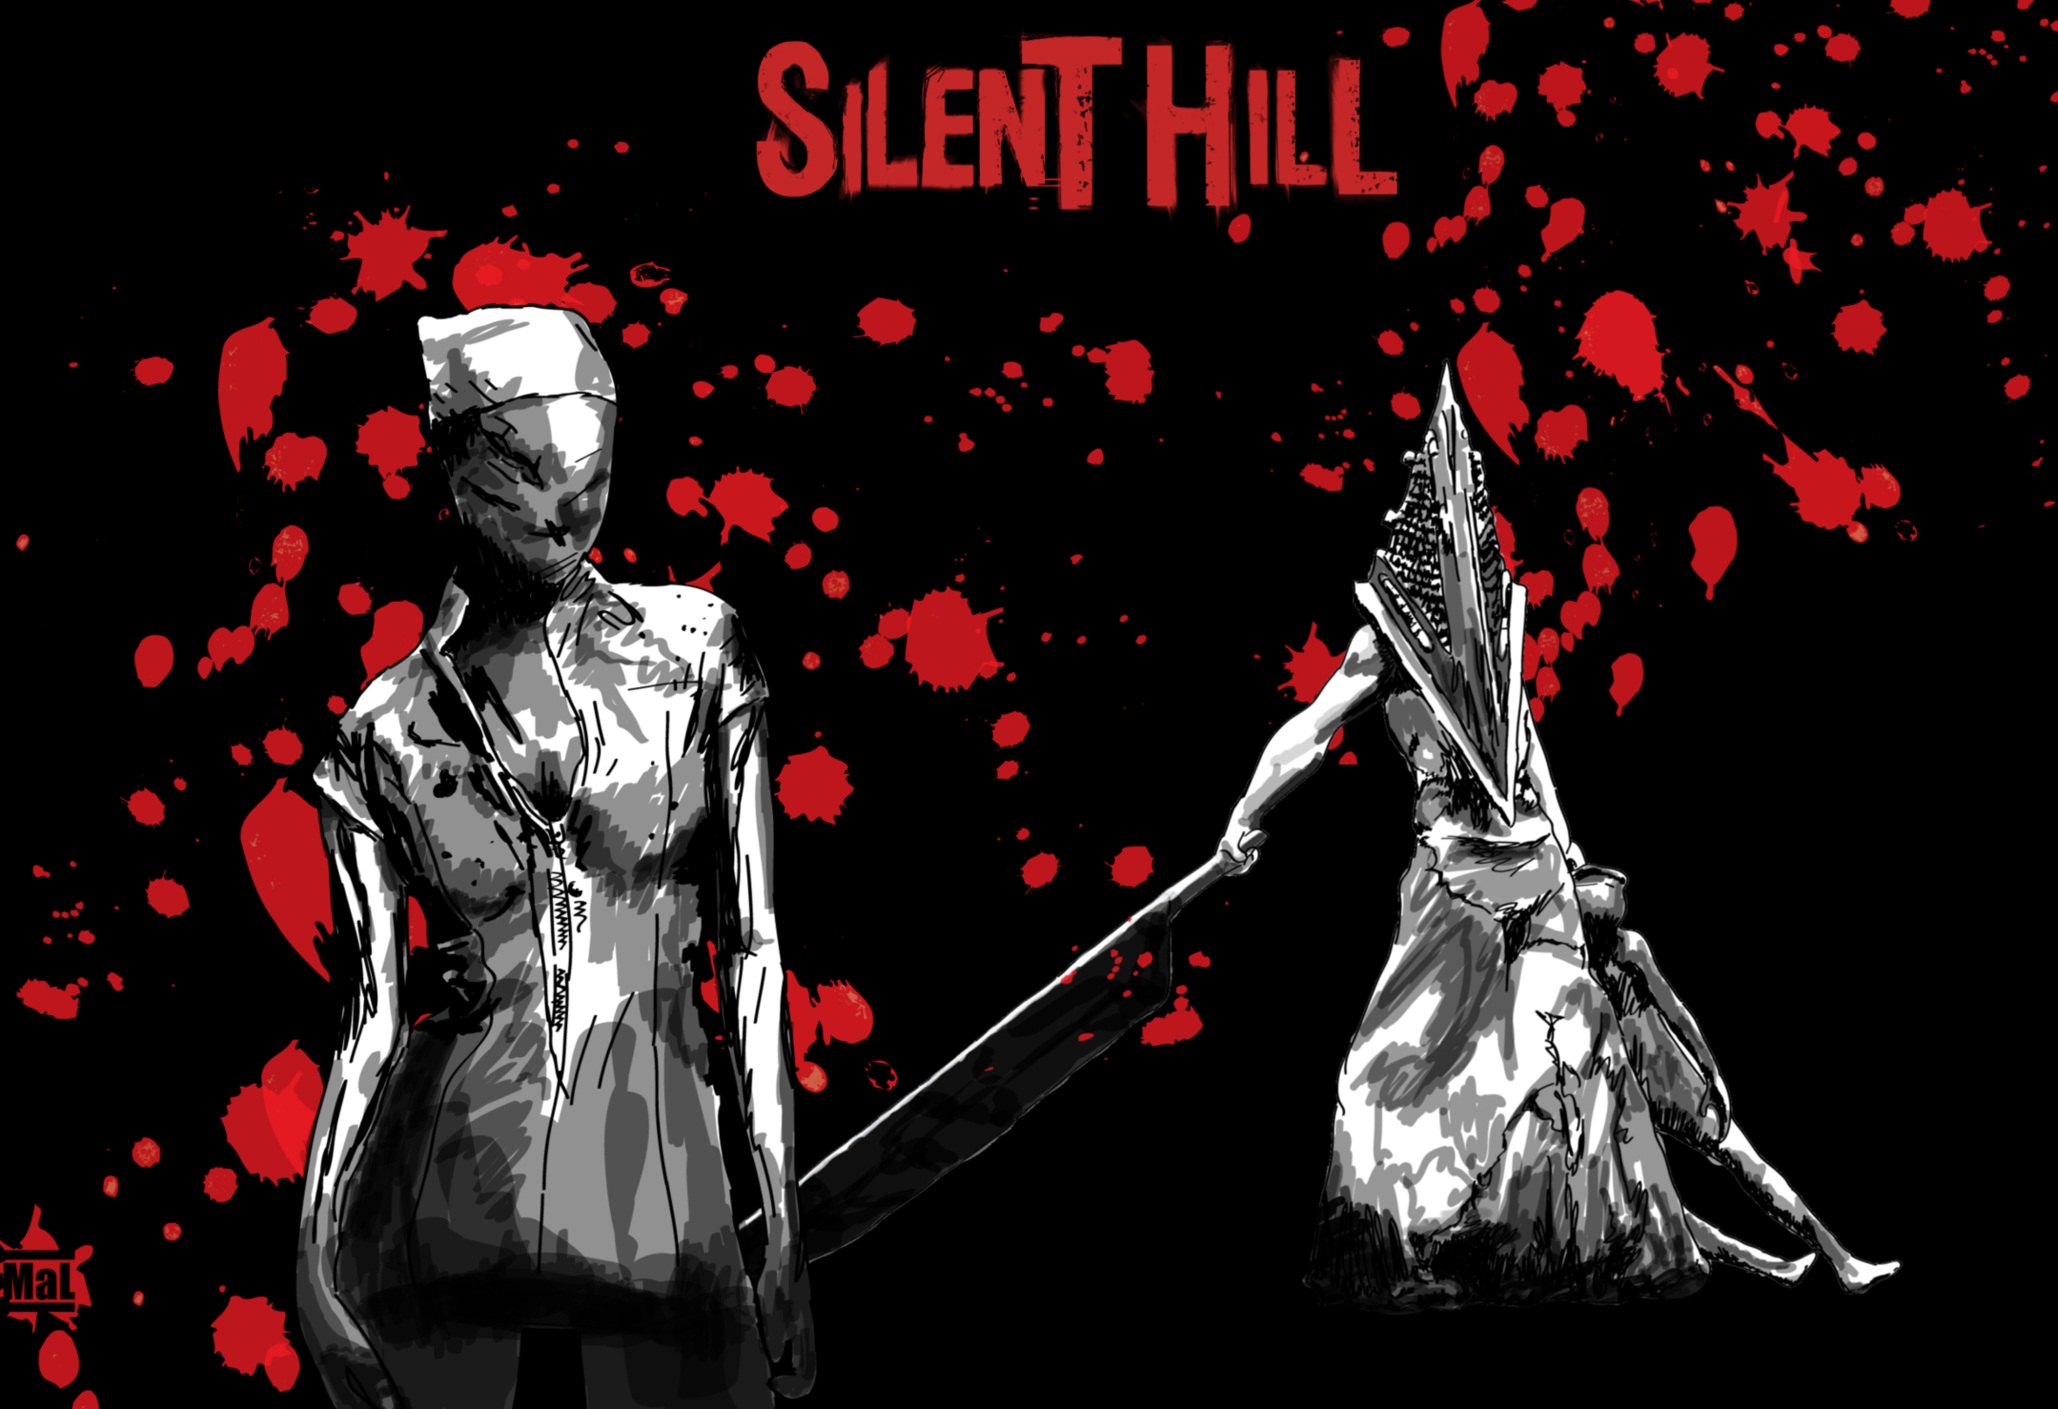 Spooky video game artwork featuring Silent Hill - perfect desktop wallpaper!